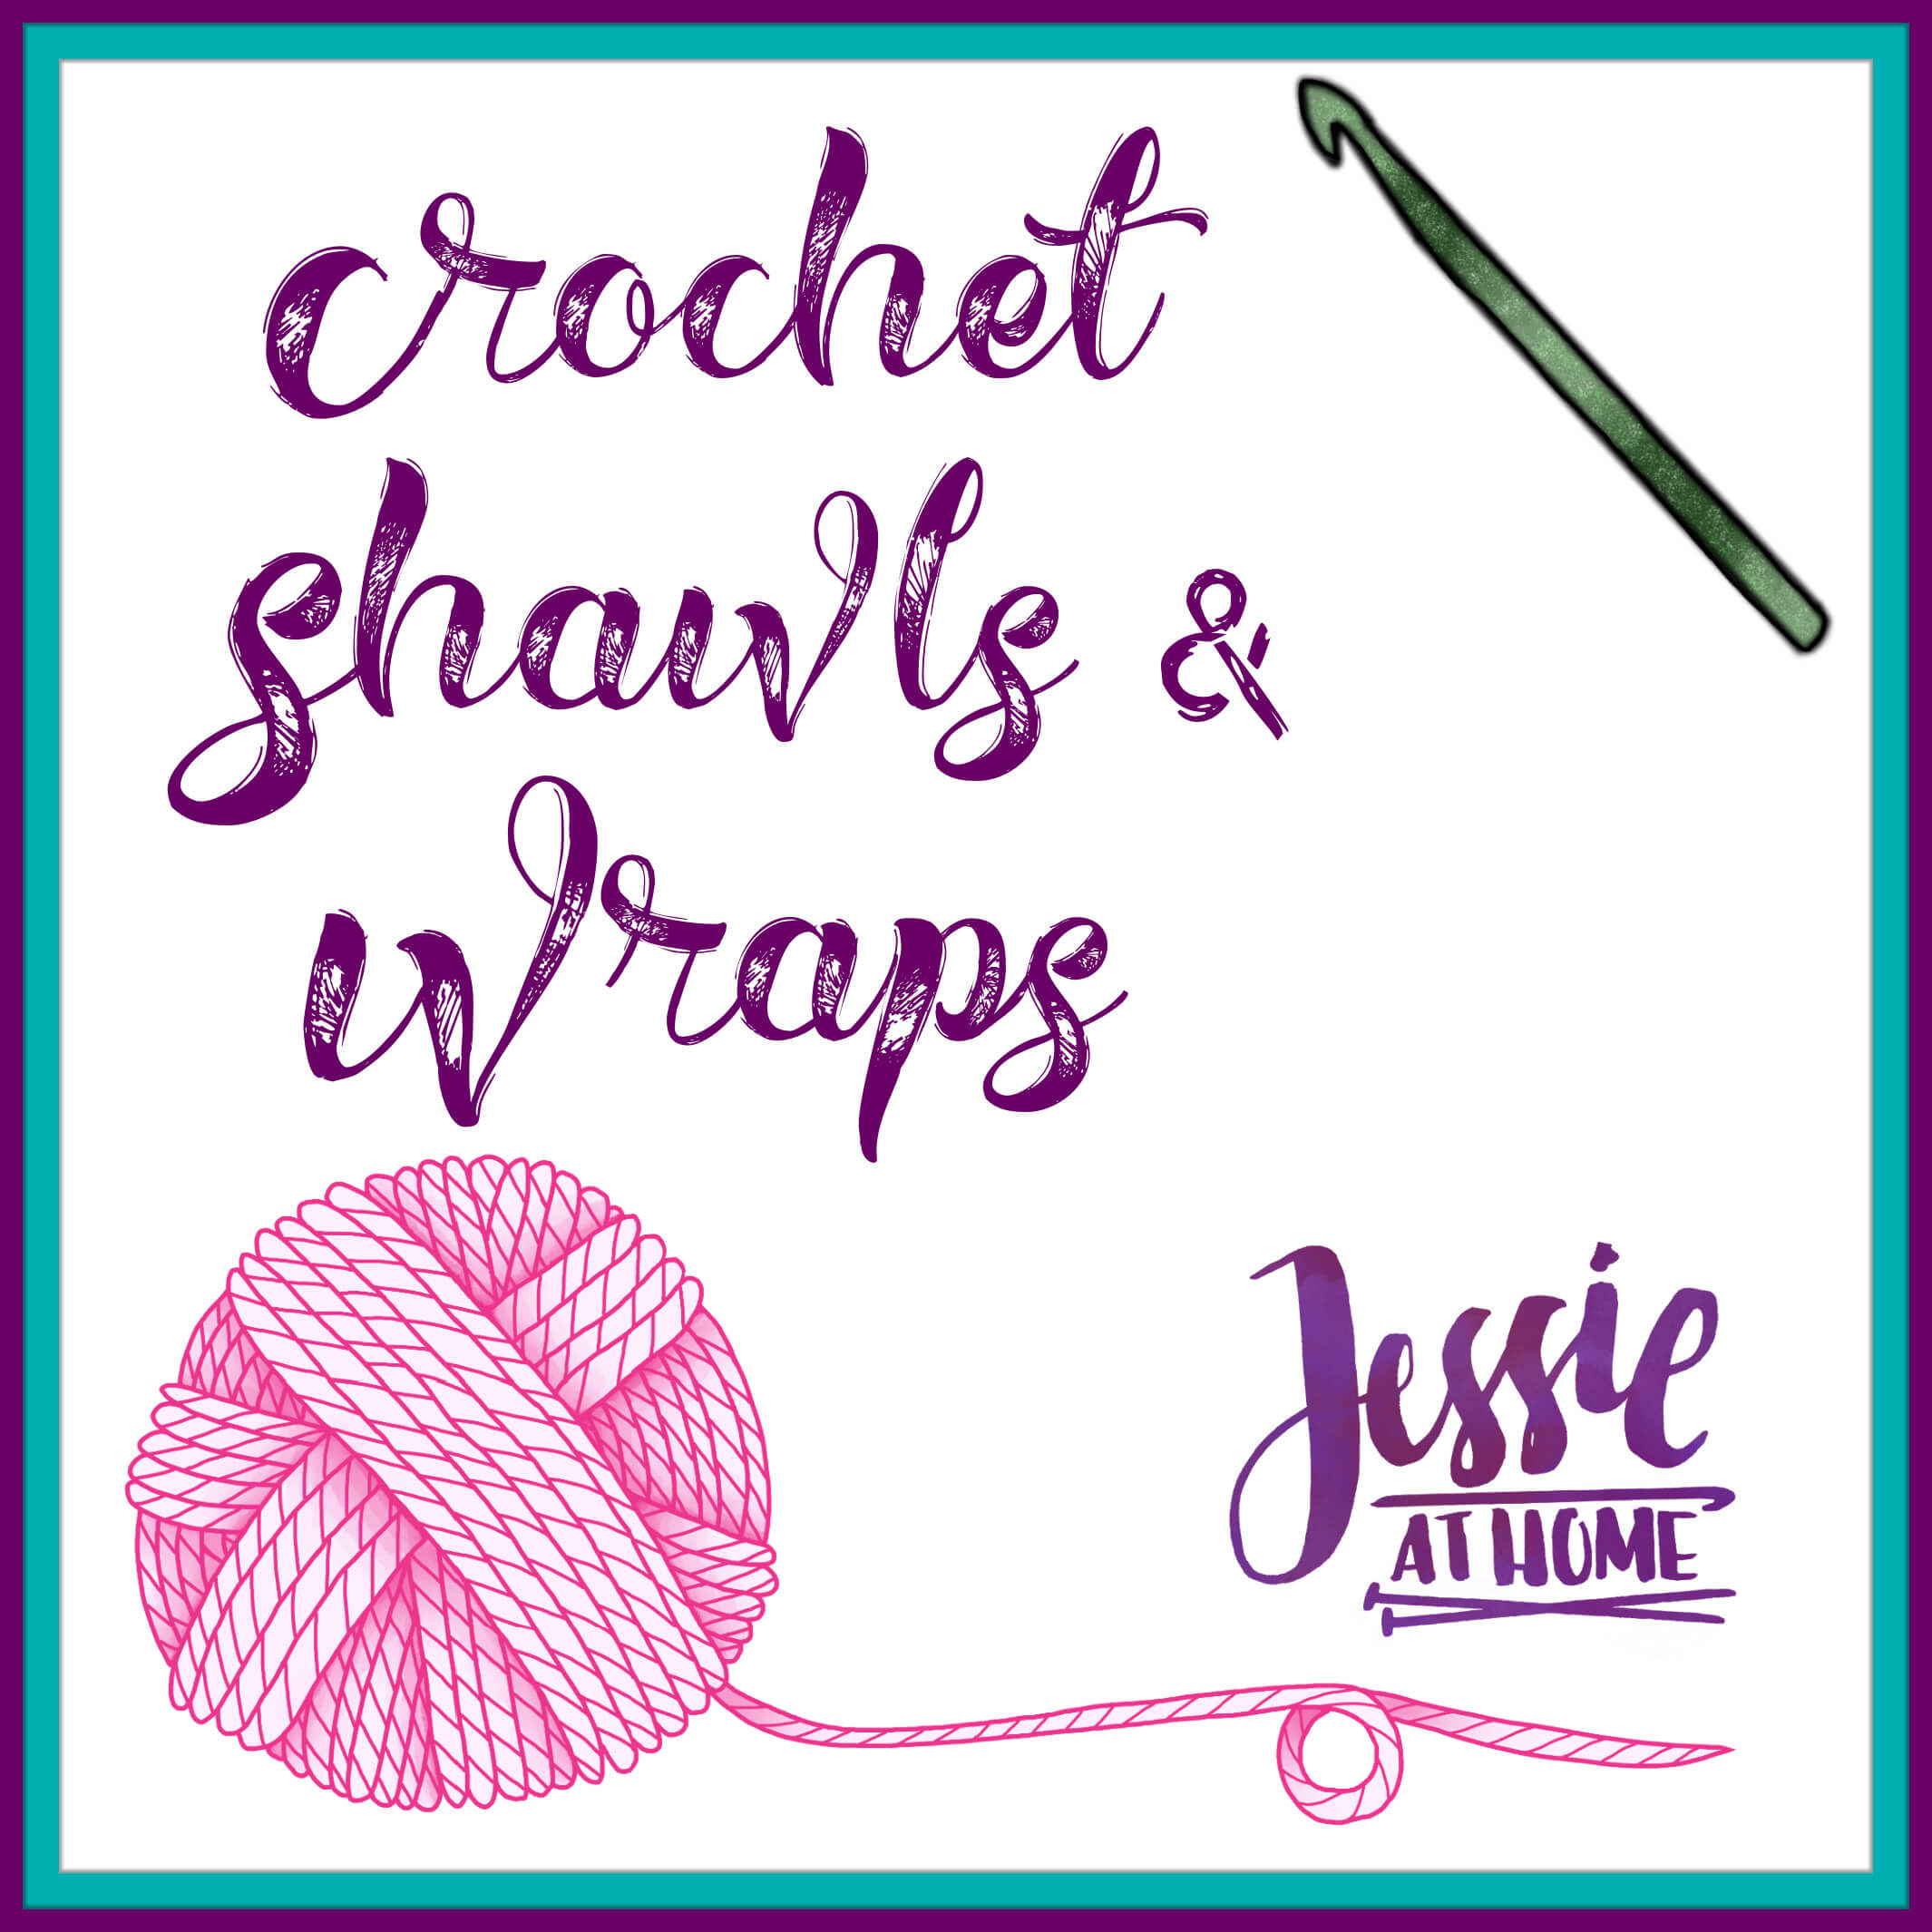 Crochet Shawls & Wraps Pattern Menu on Jessie At Home